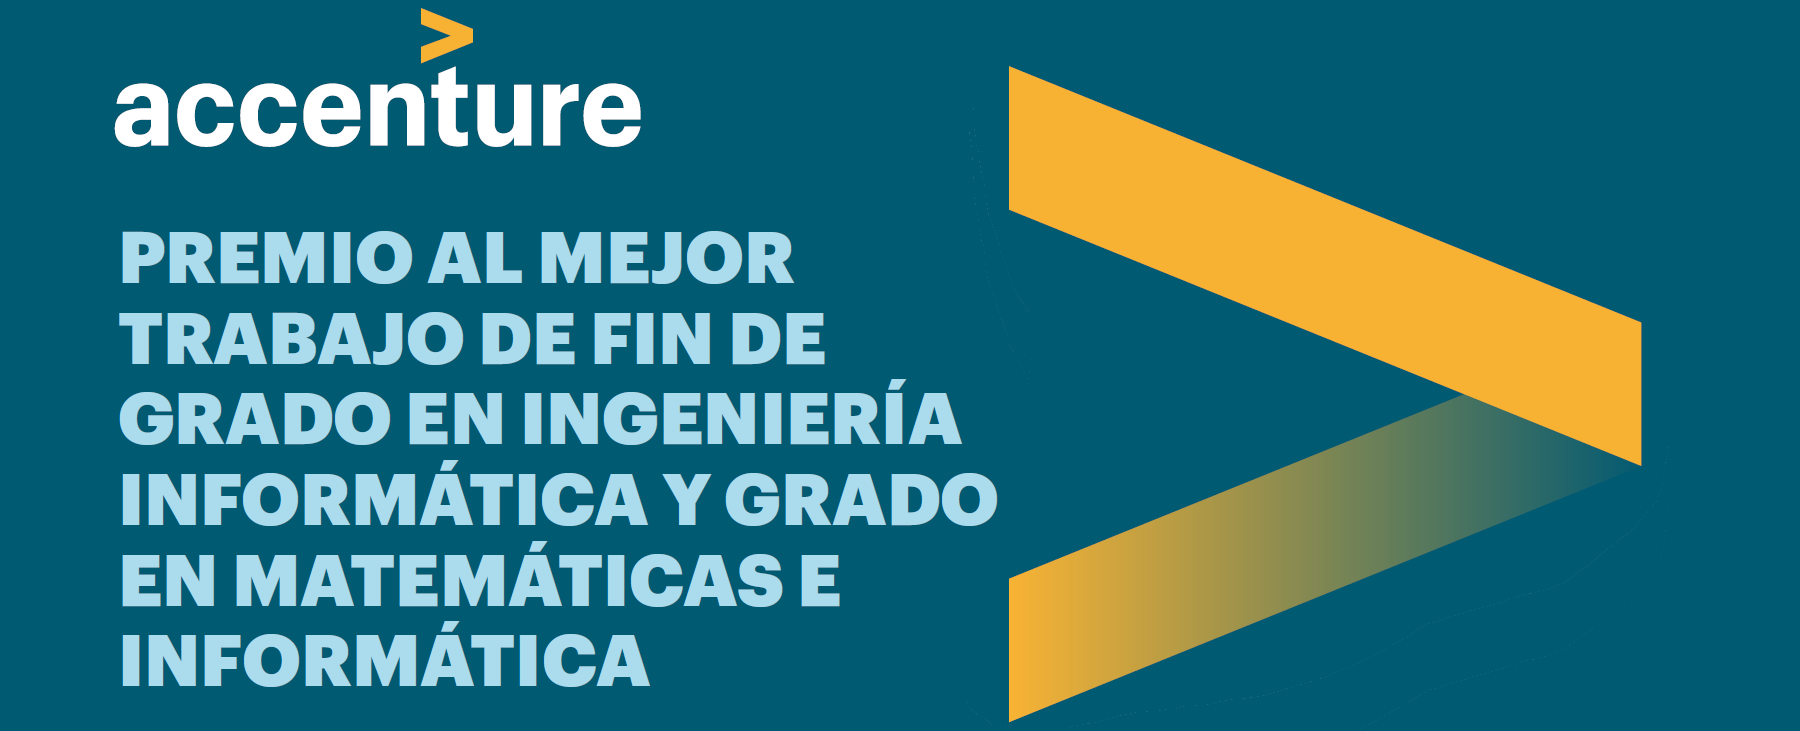 Accenture. Fragmento cartel premio mejor TFG 2016-17